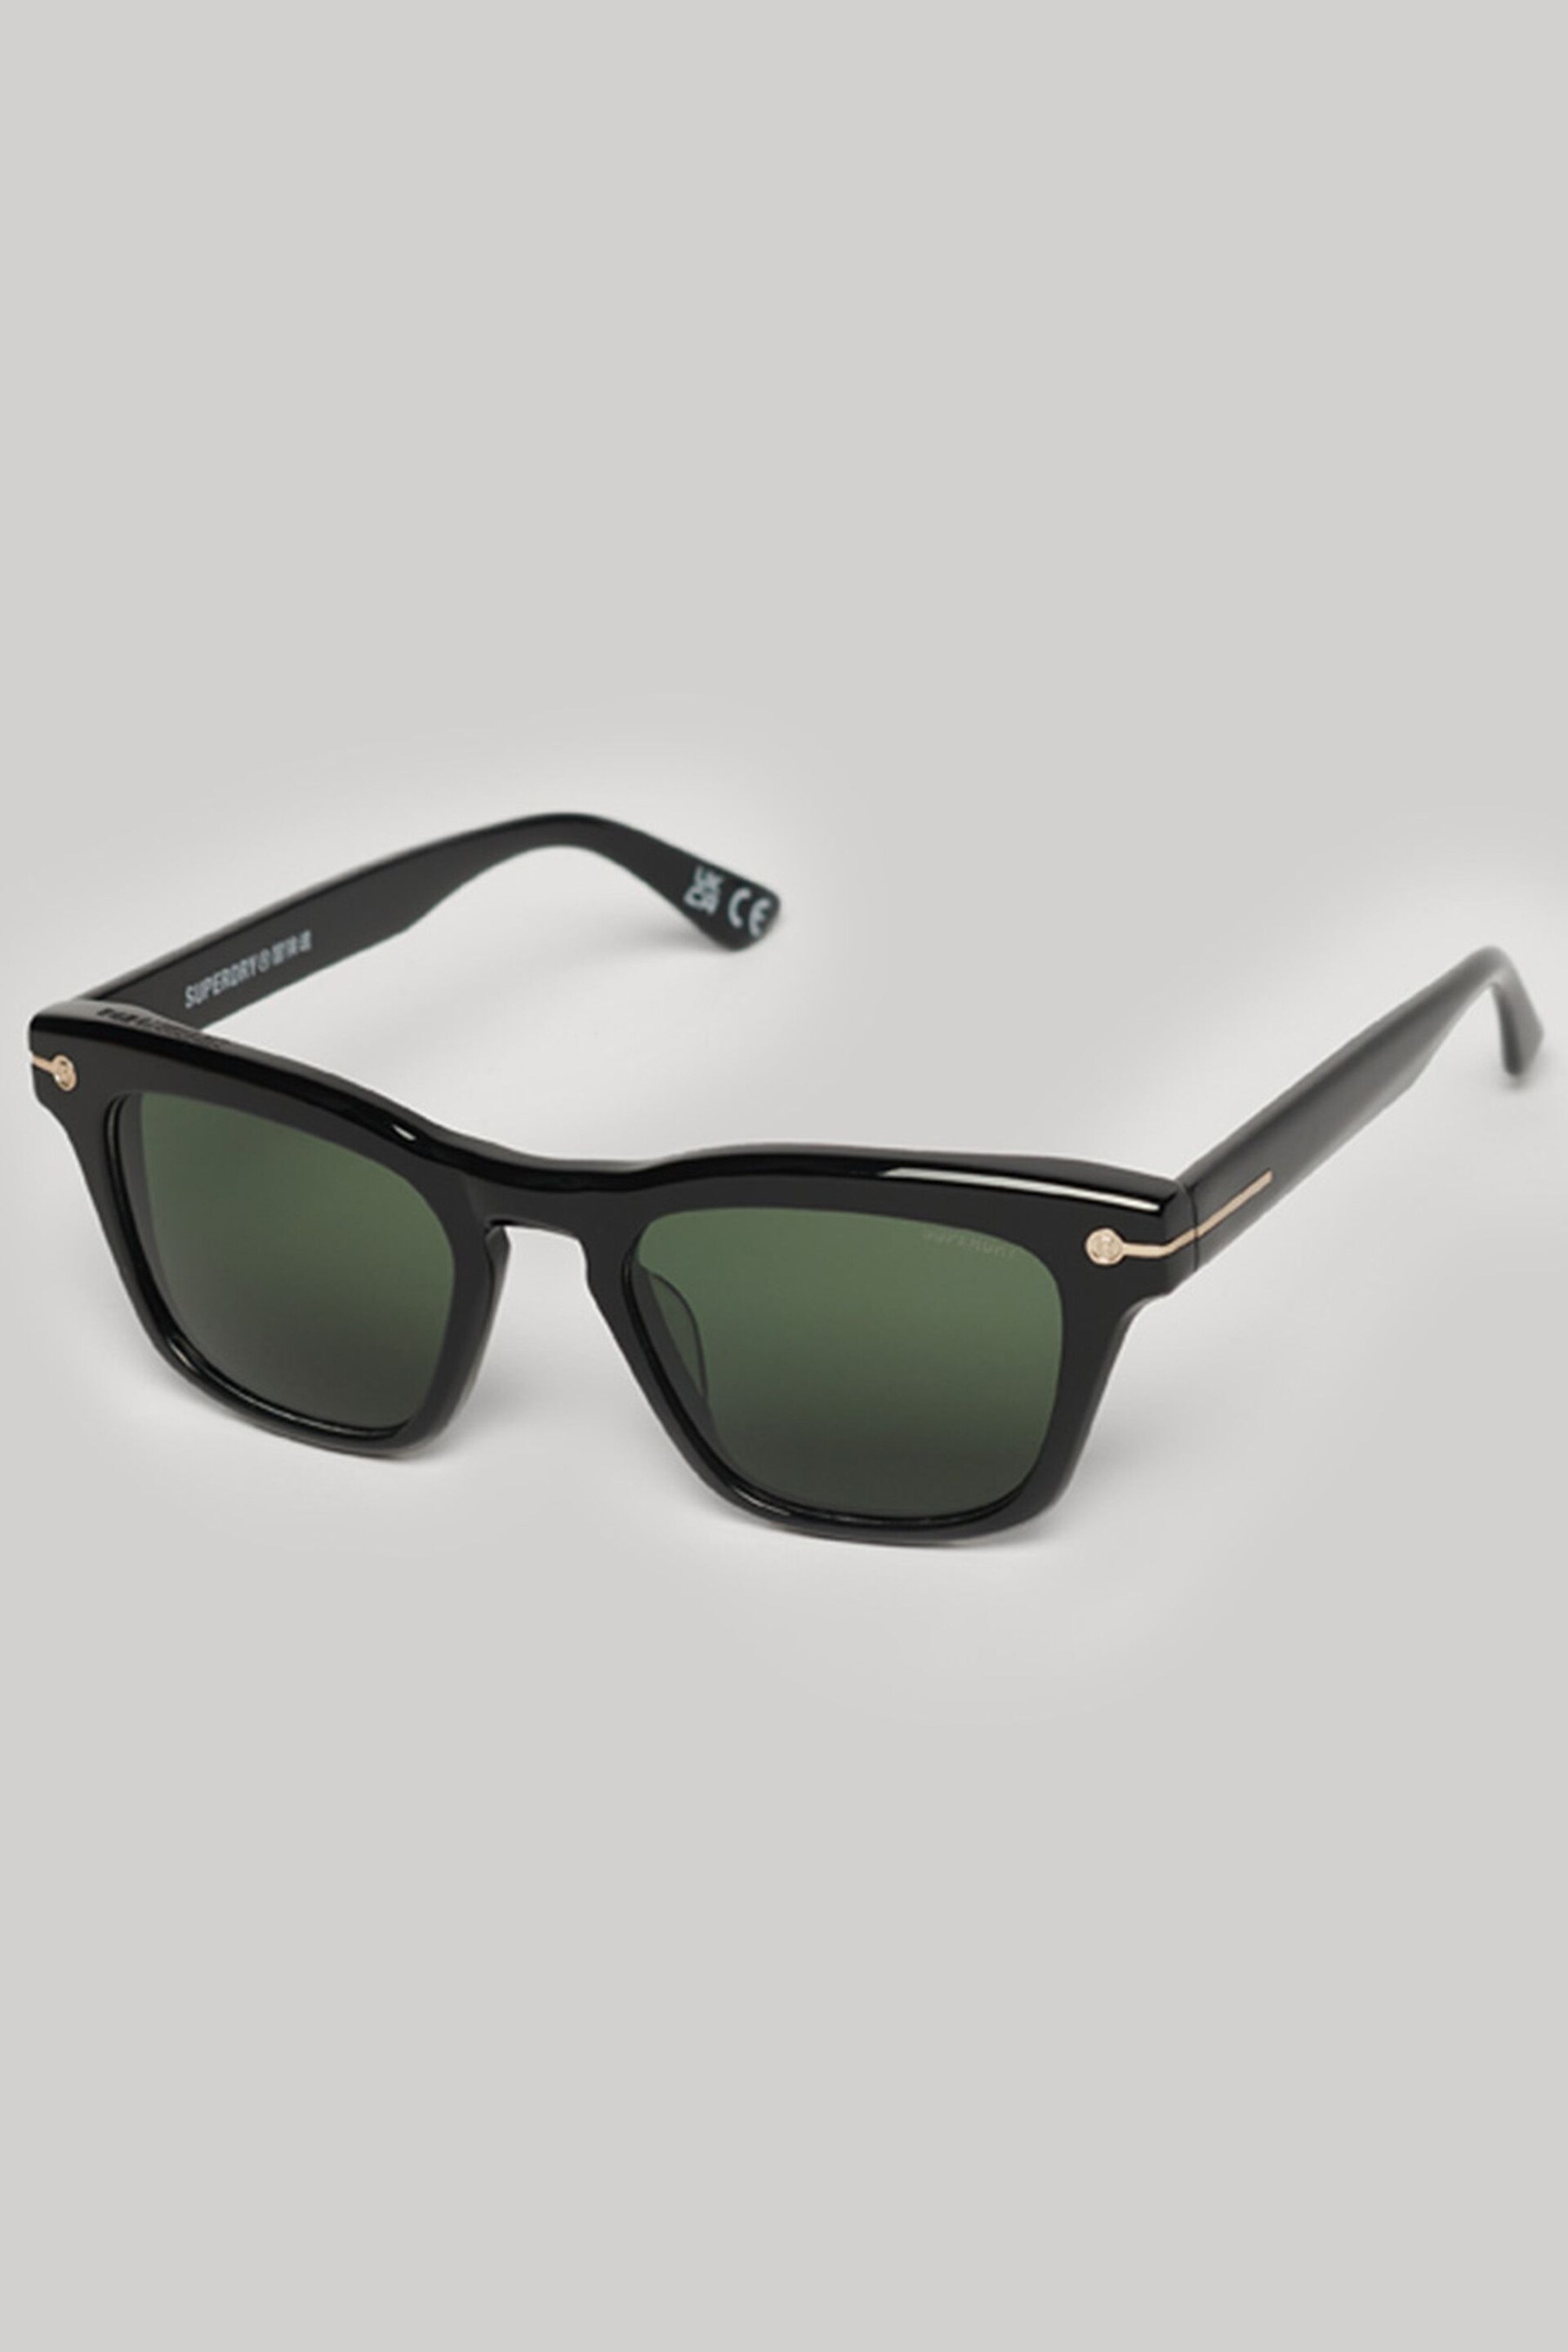 Superdry Black SDR Stamford Sunglasses - Image 1 of 3